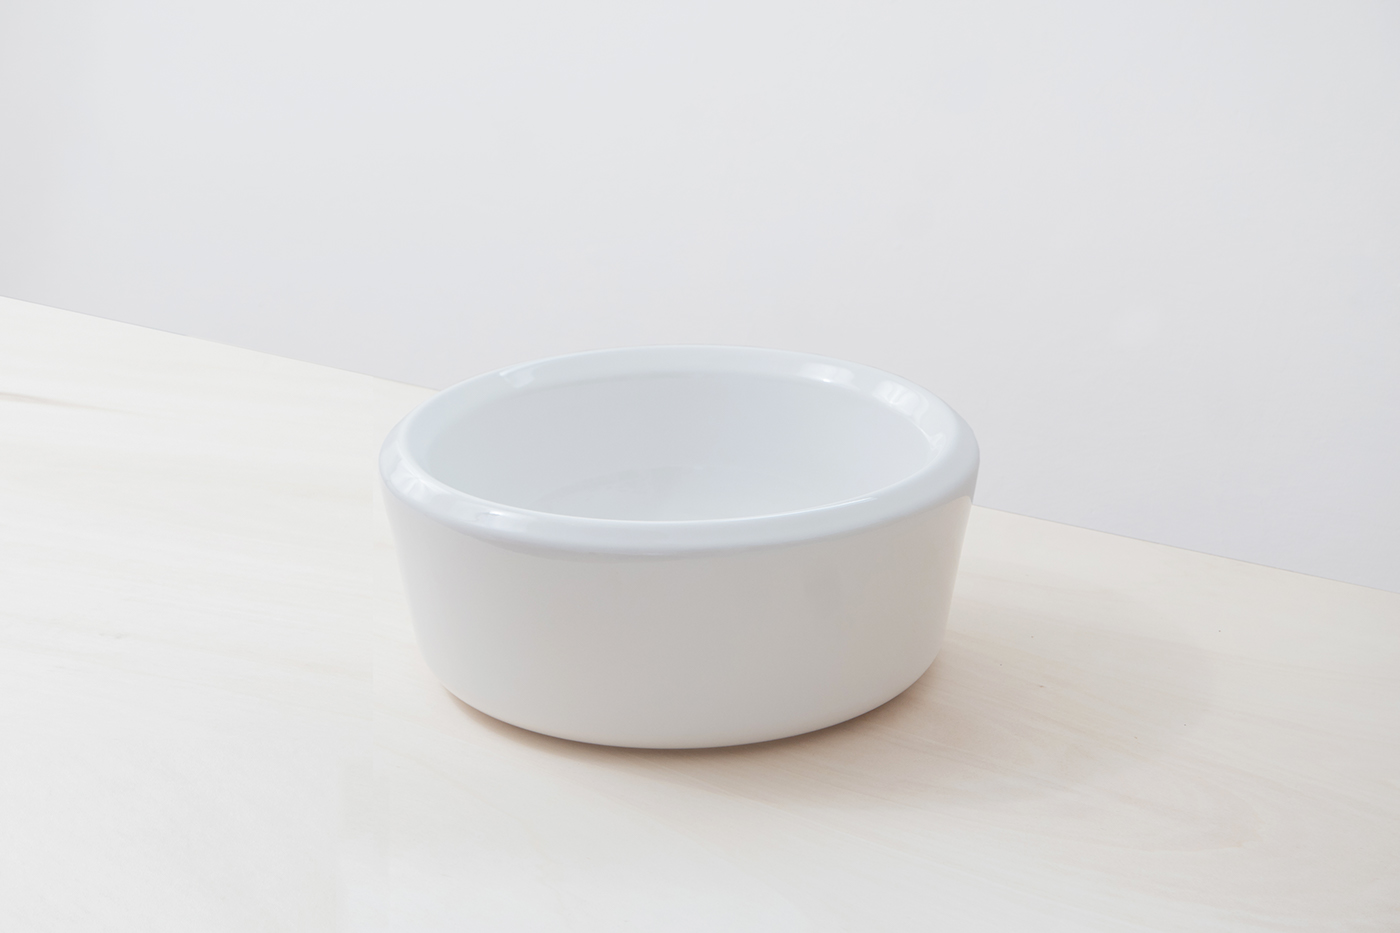 alessiani ceramic White bathroom Sink design industrial Italy mario washbasin